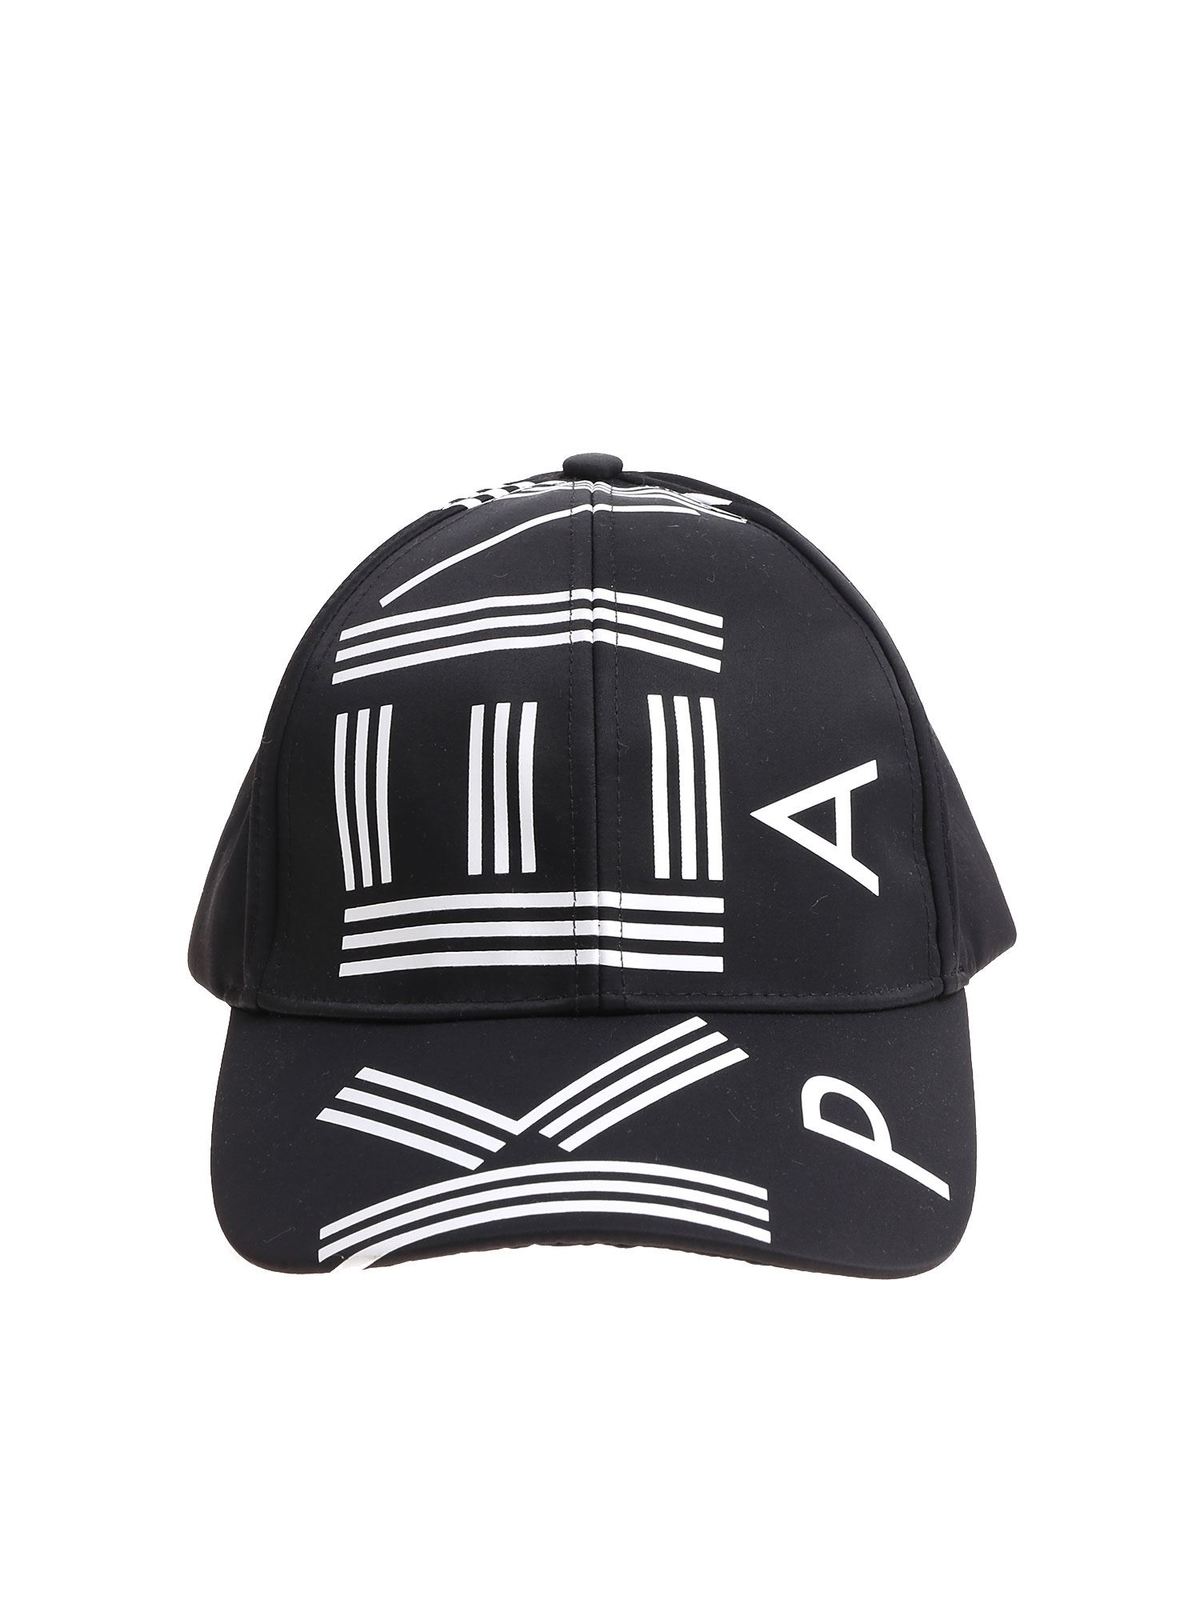 kenzo black cap